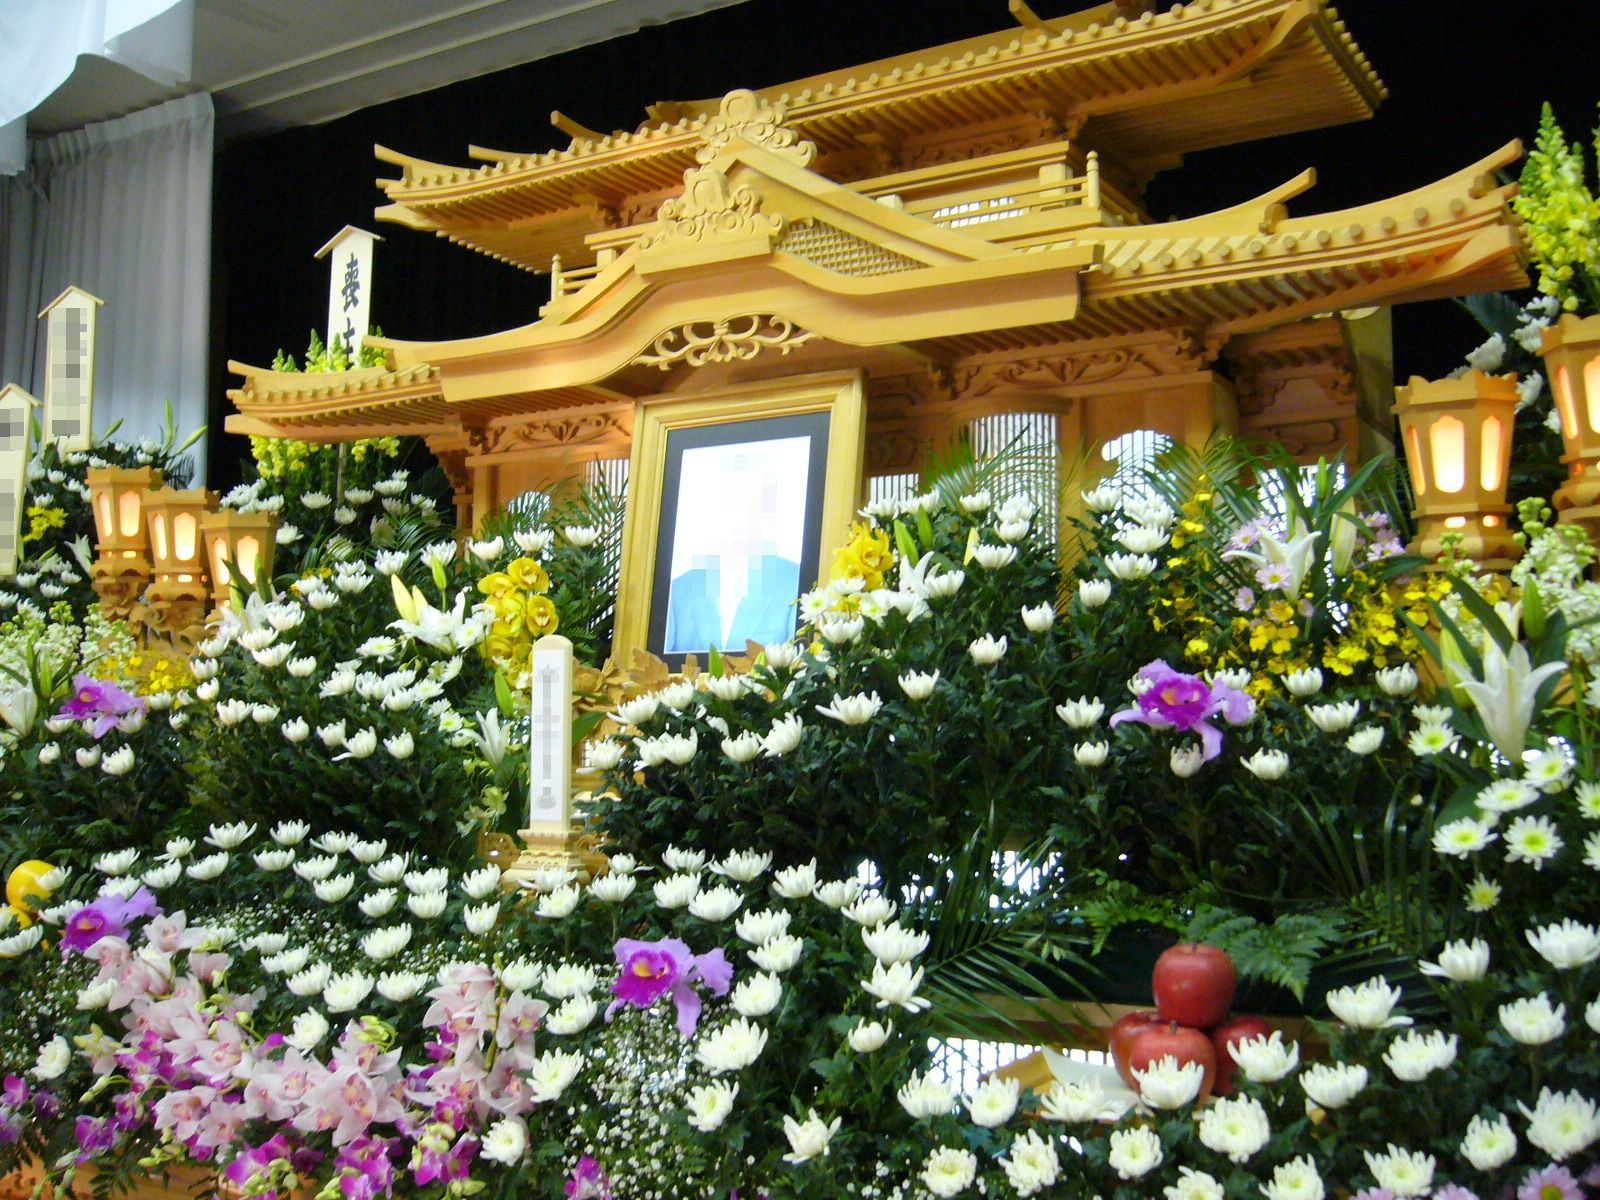 Burial in Japan